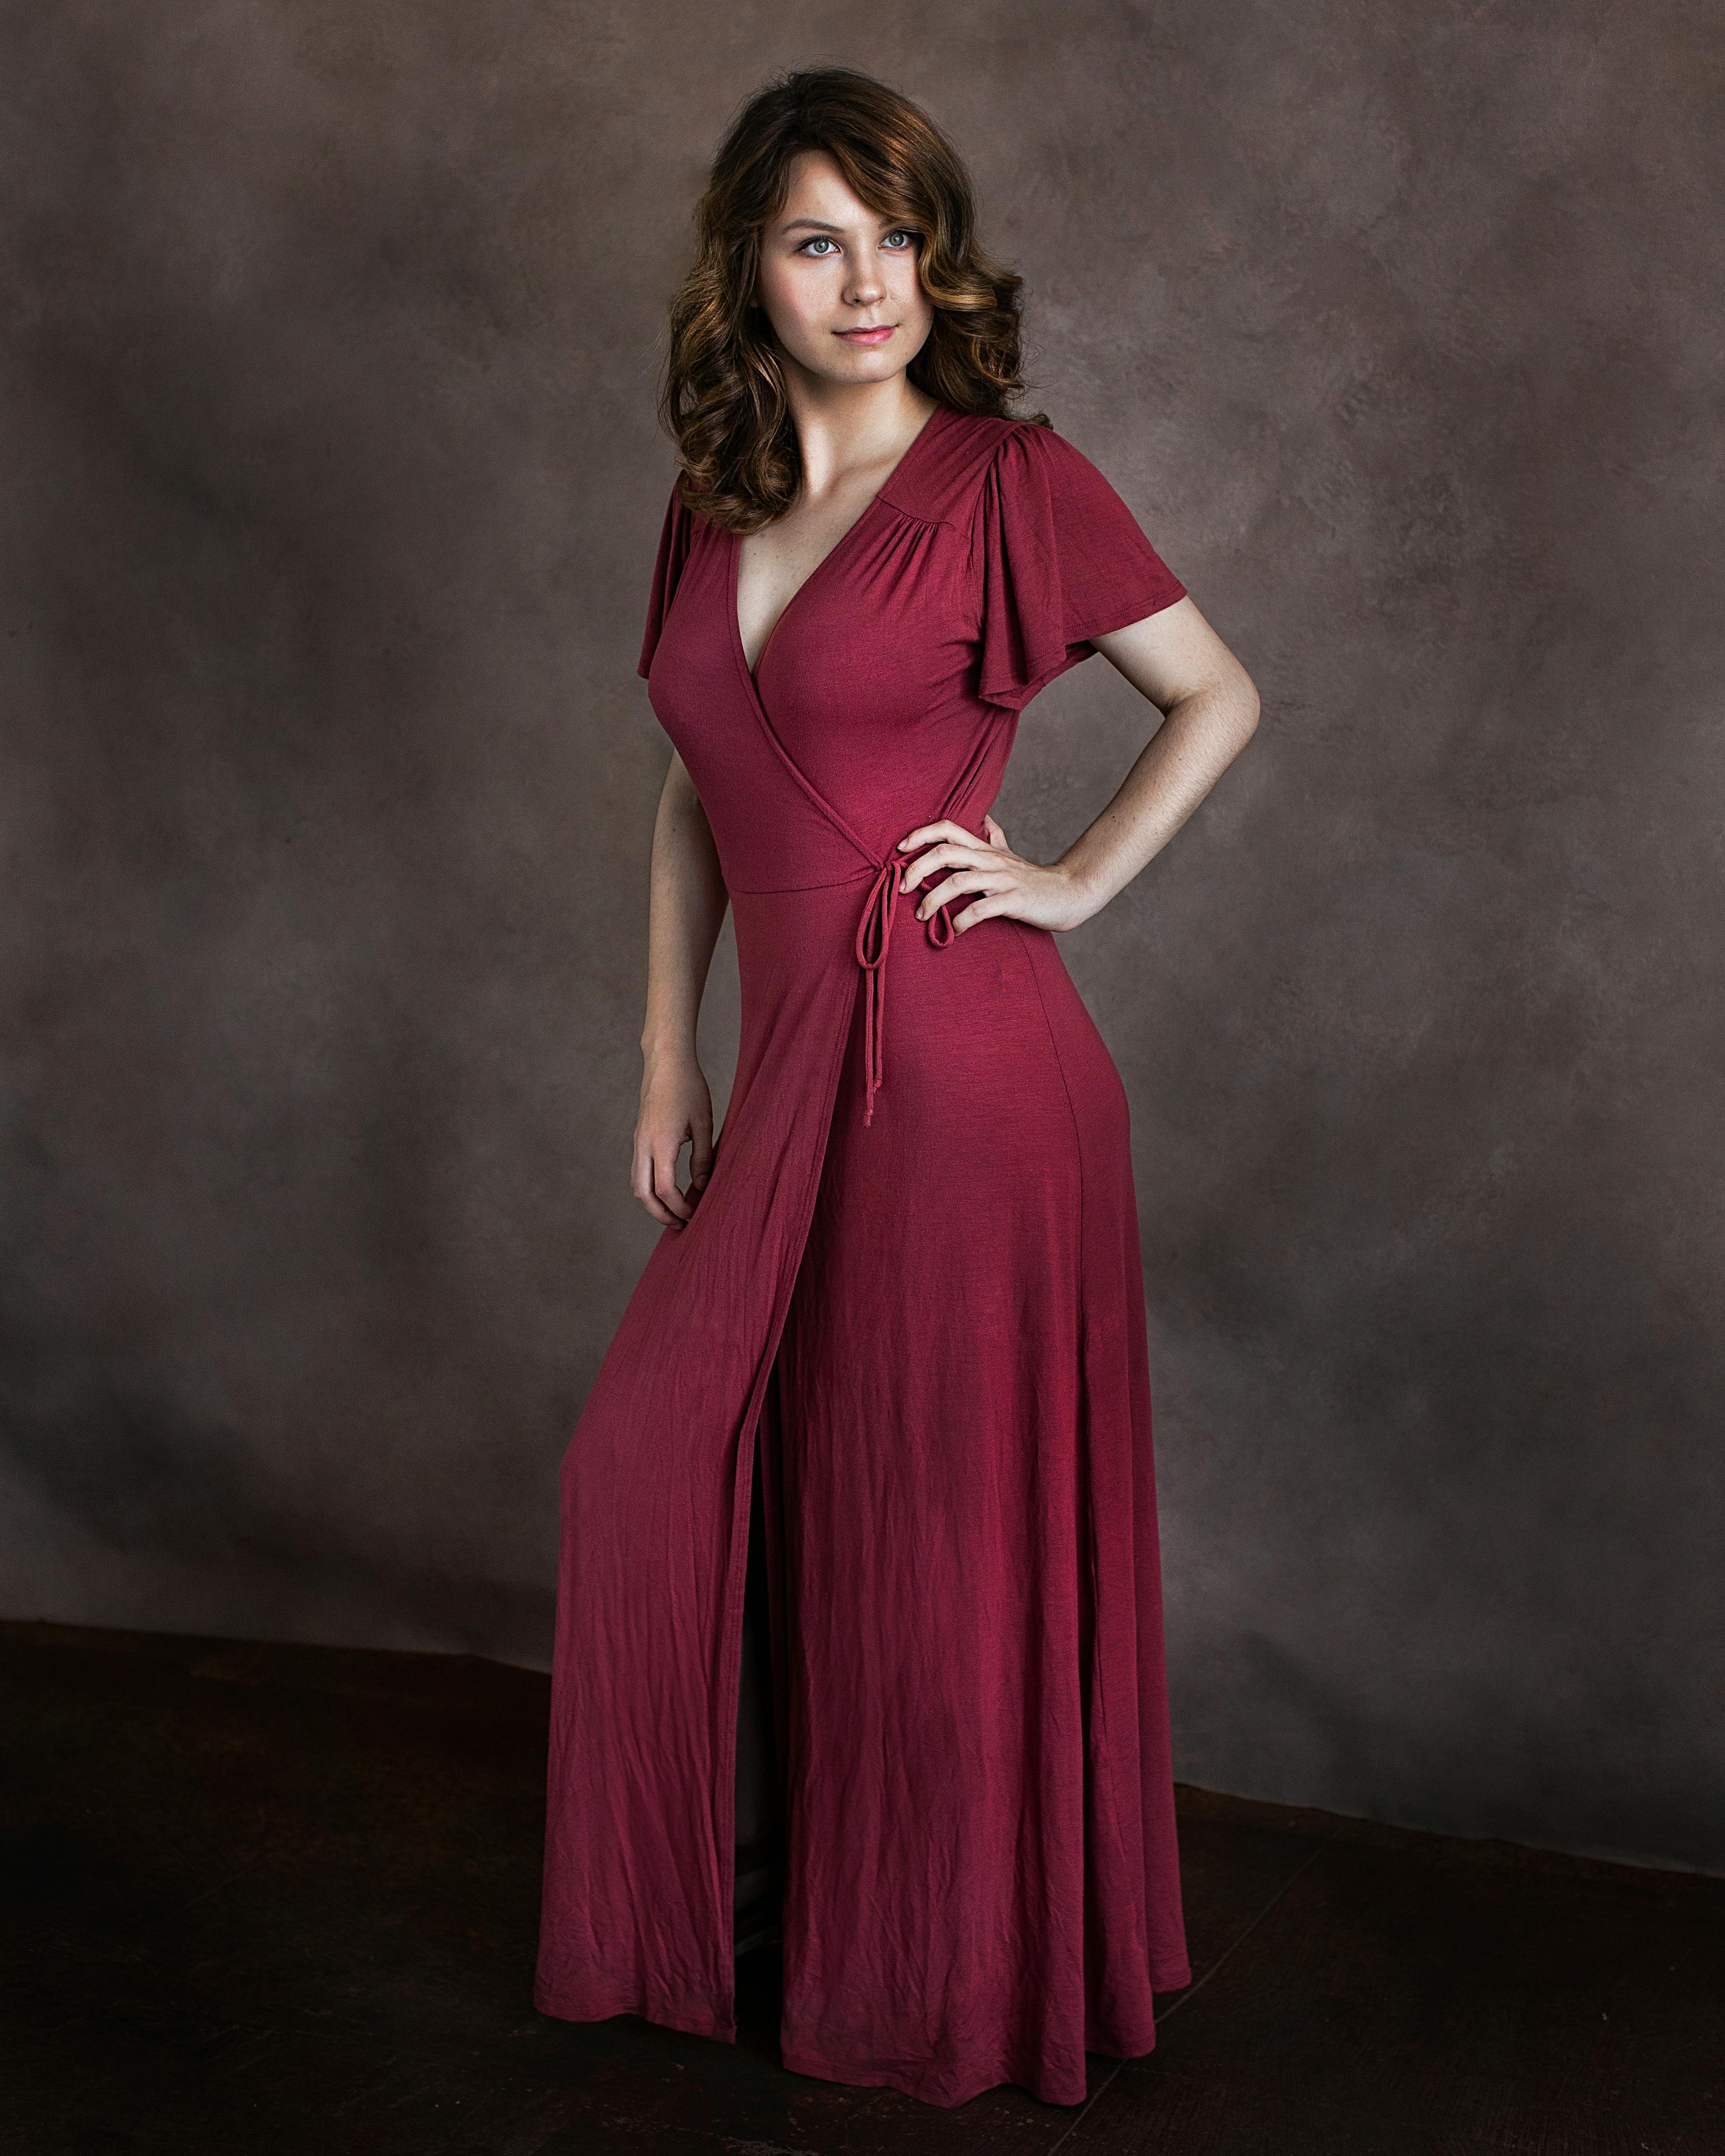 The red dress of Vivian Ward (Julia Roberts) in Pretty Woman | Spotern